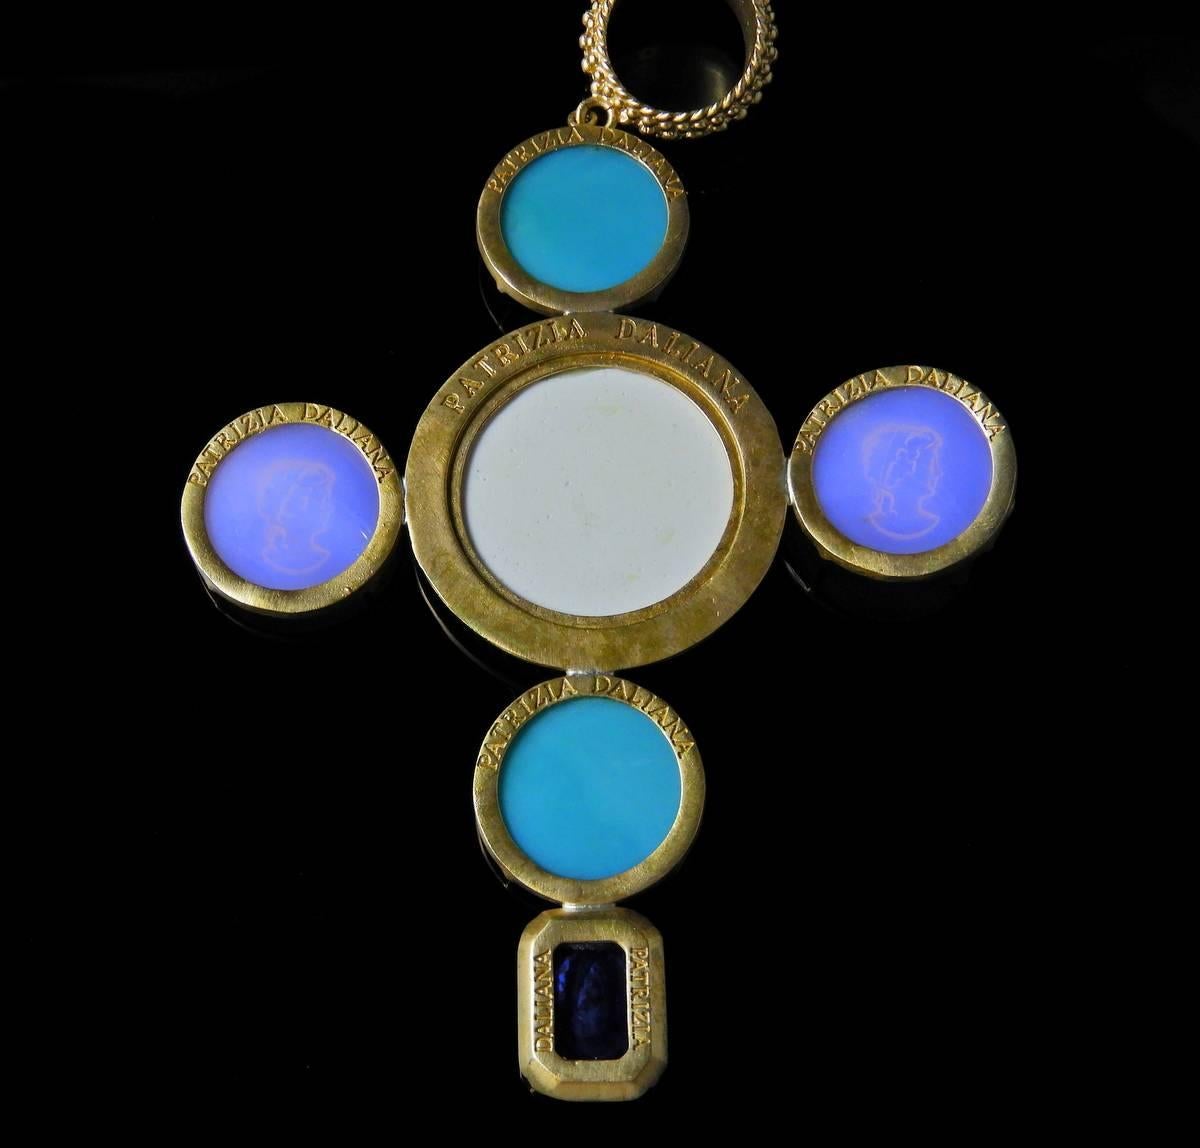 bronze Cross pendant and chain by Patrizia Daliana 4